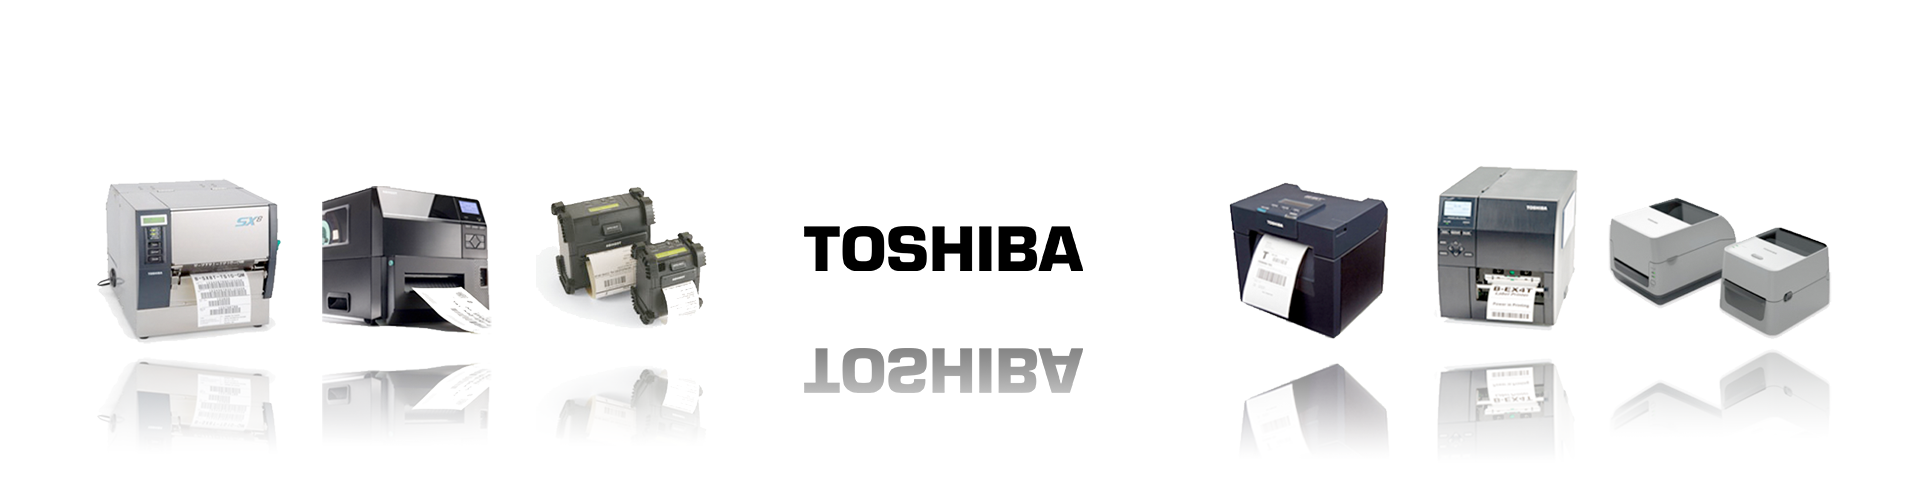 Syntechnologies Toshiba